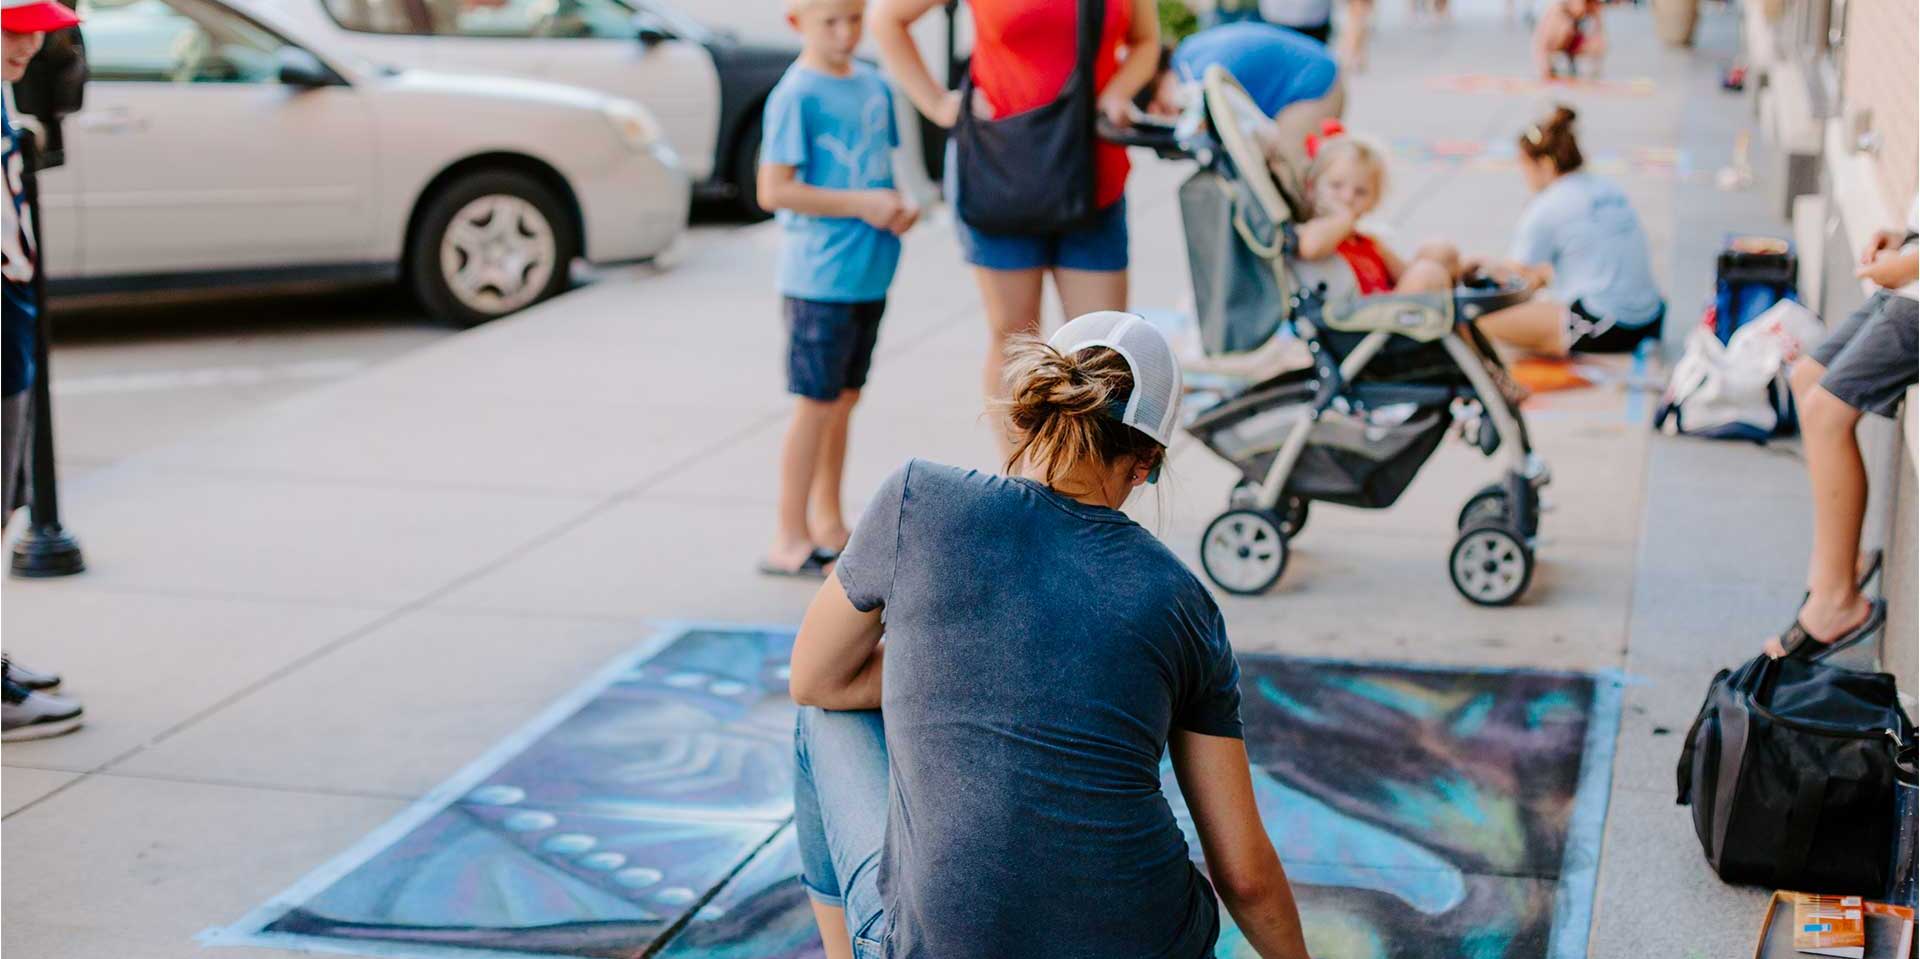 Chalk Art Festival promotional image